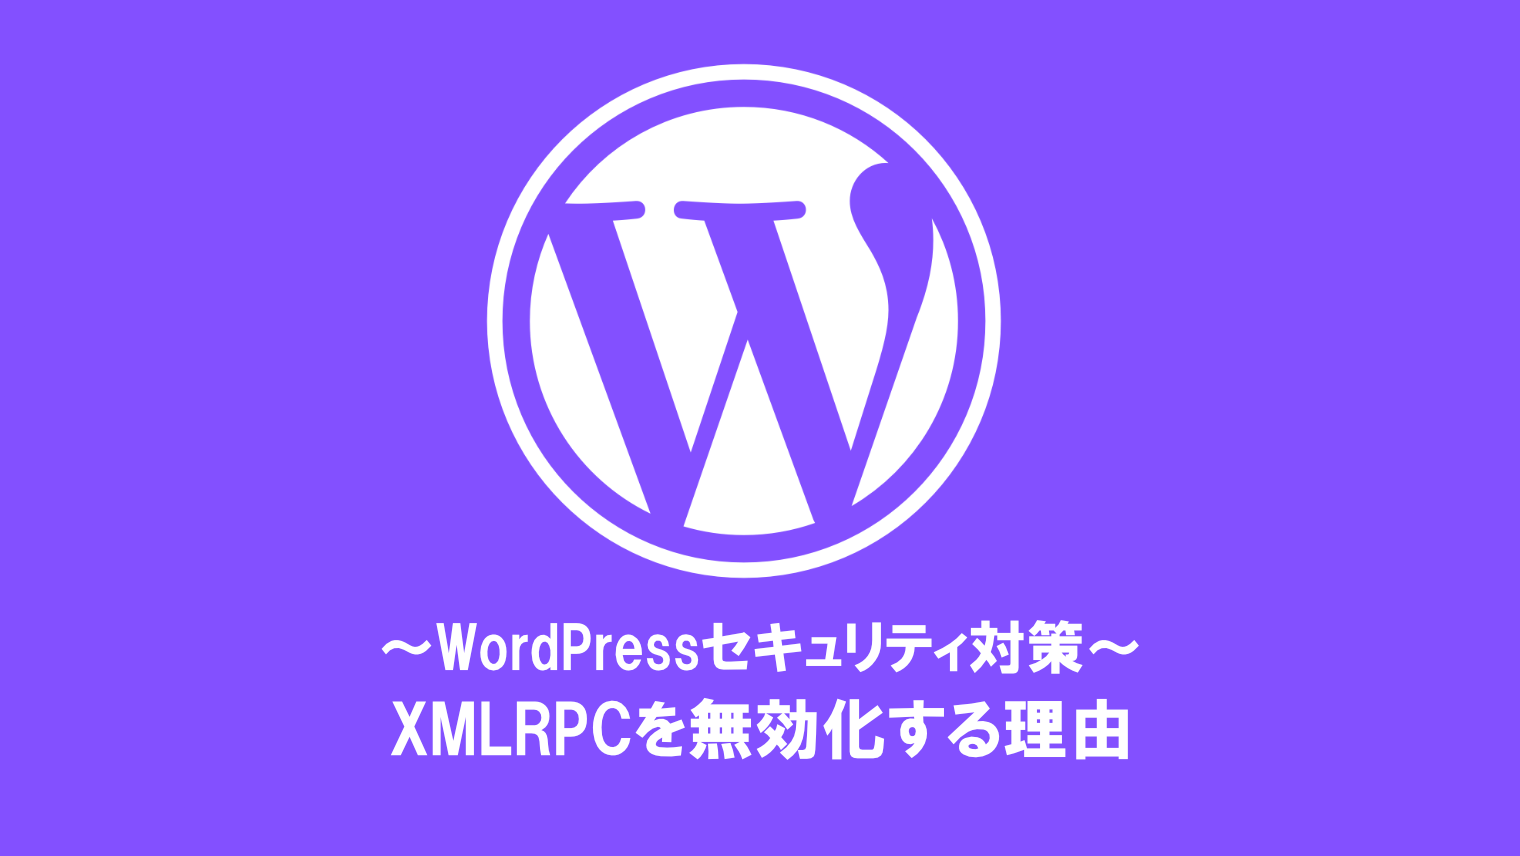 【WordPressセキュリティ対策】XMLRPC機能は絶対に無効化した方がいい理由